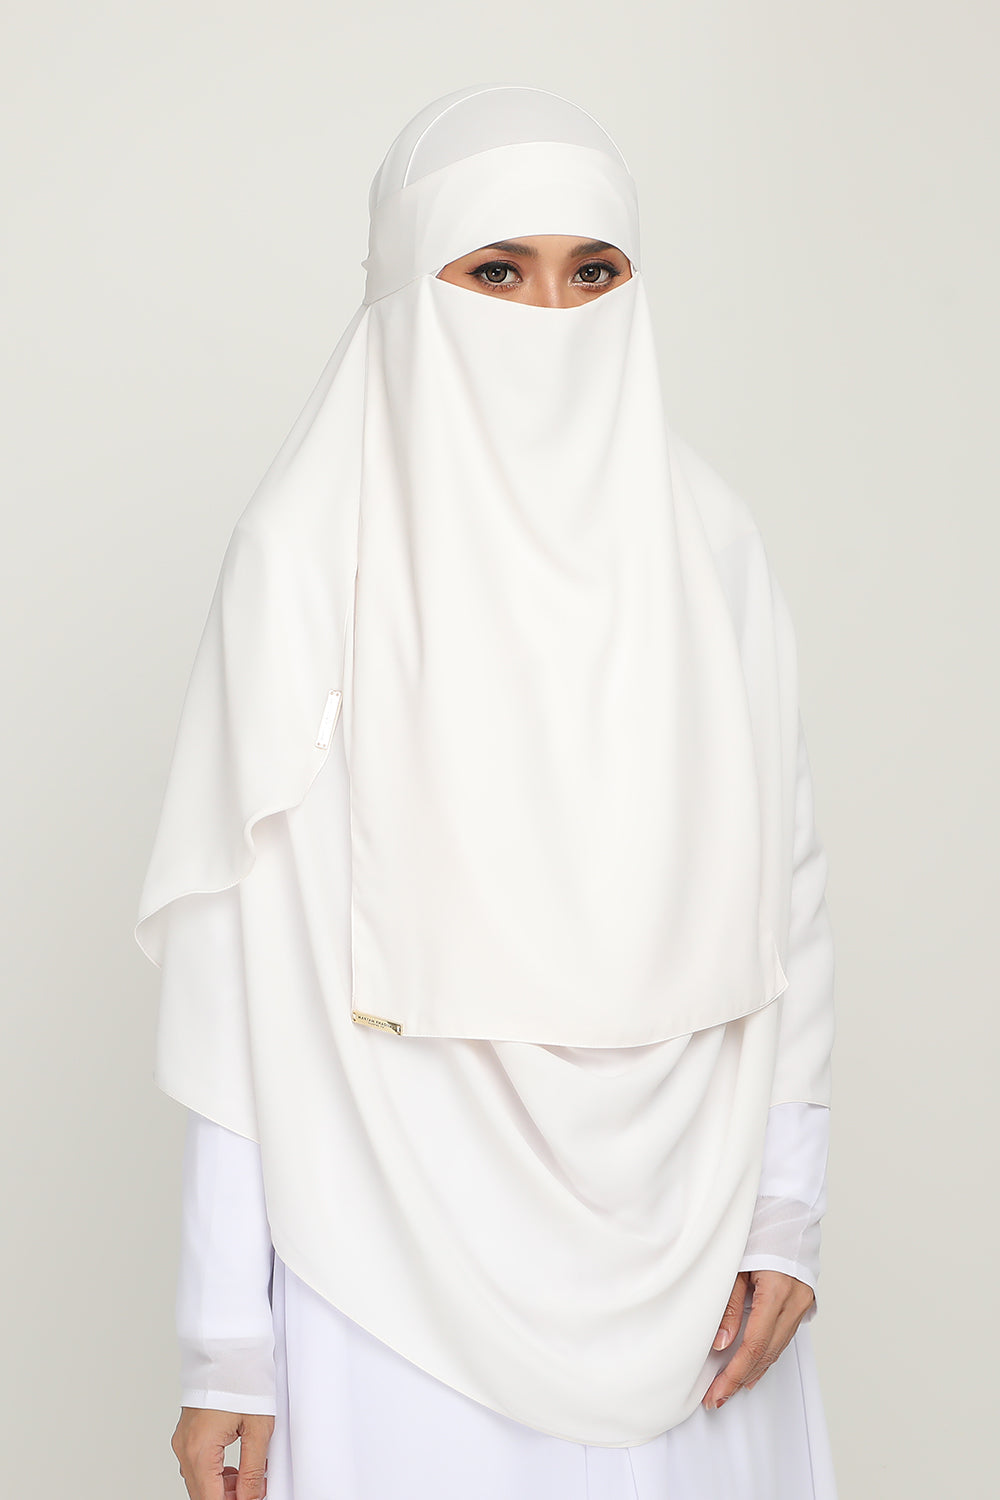 As-Is Niqab Milky White